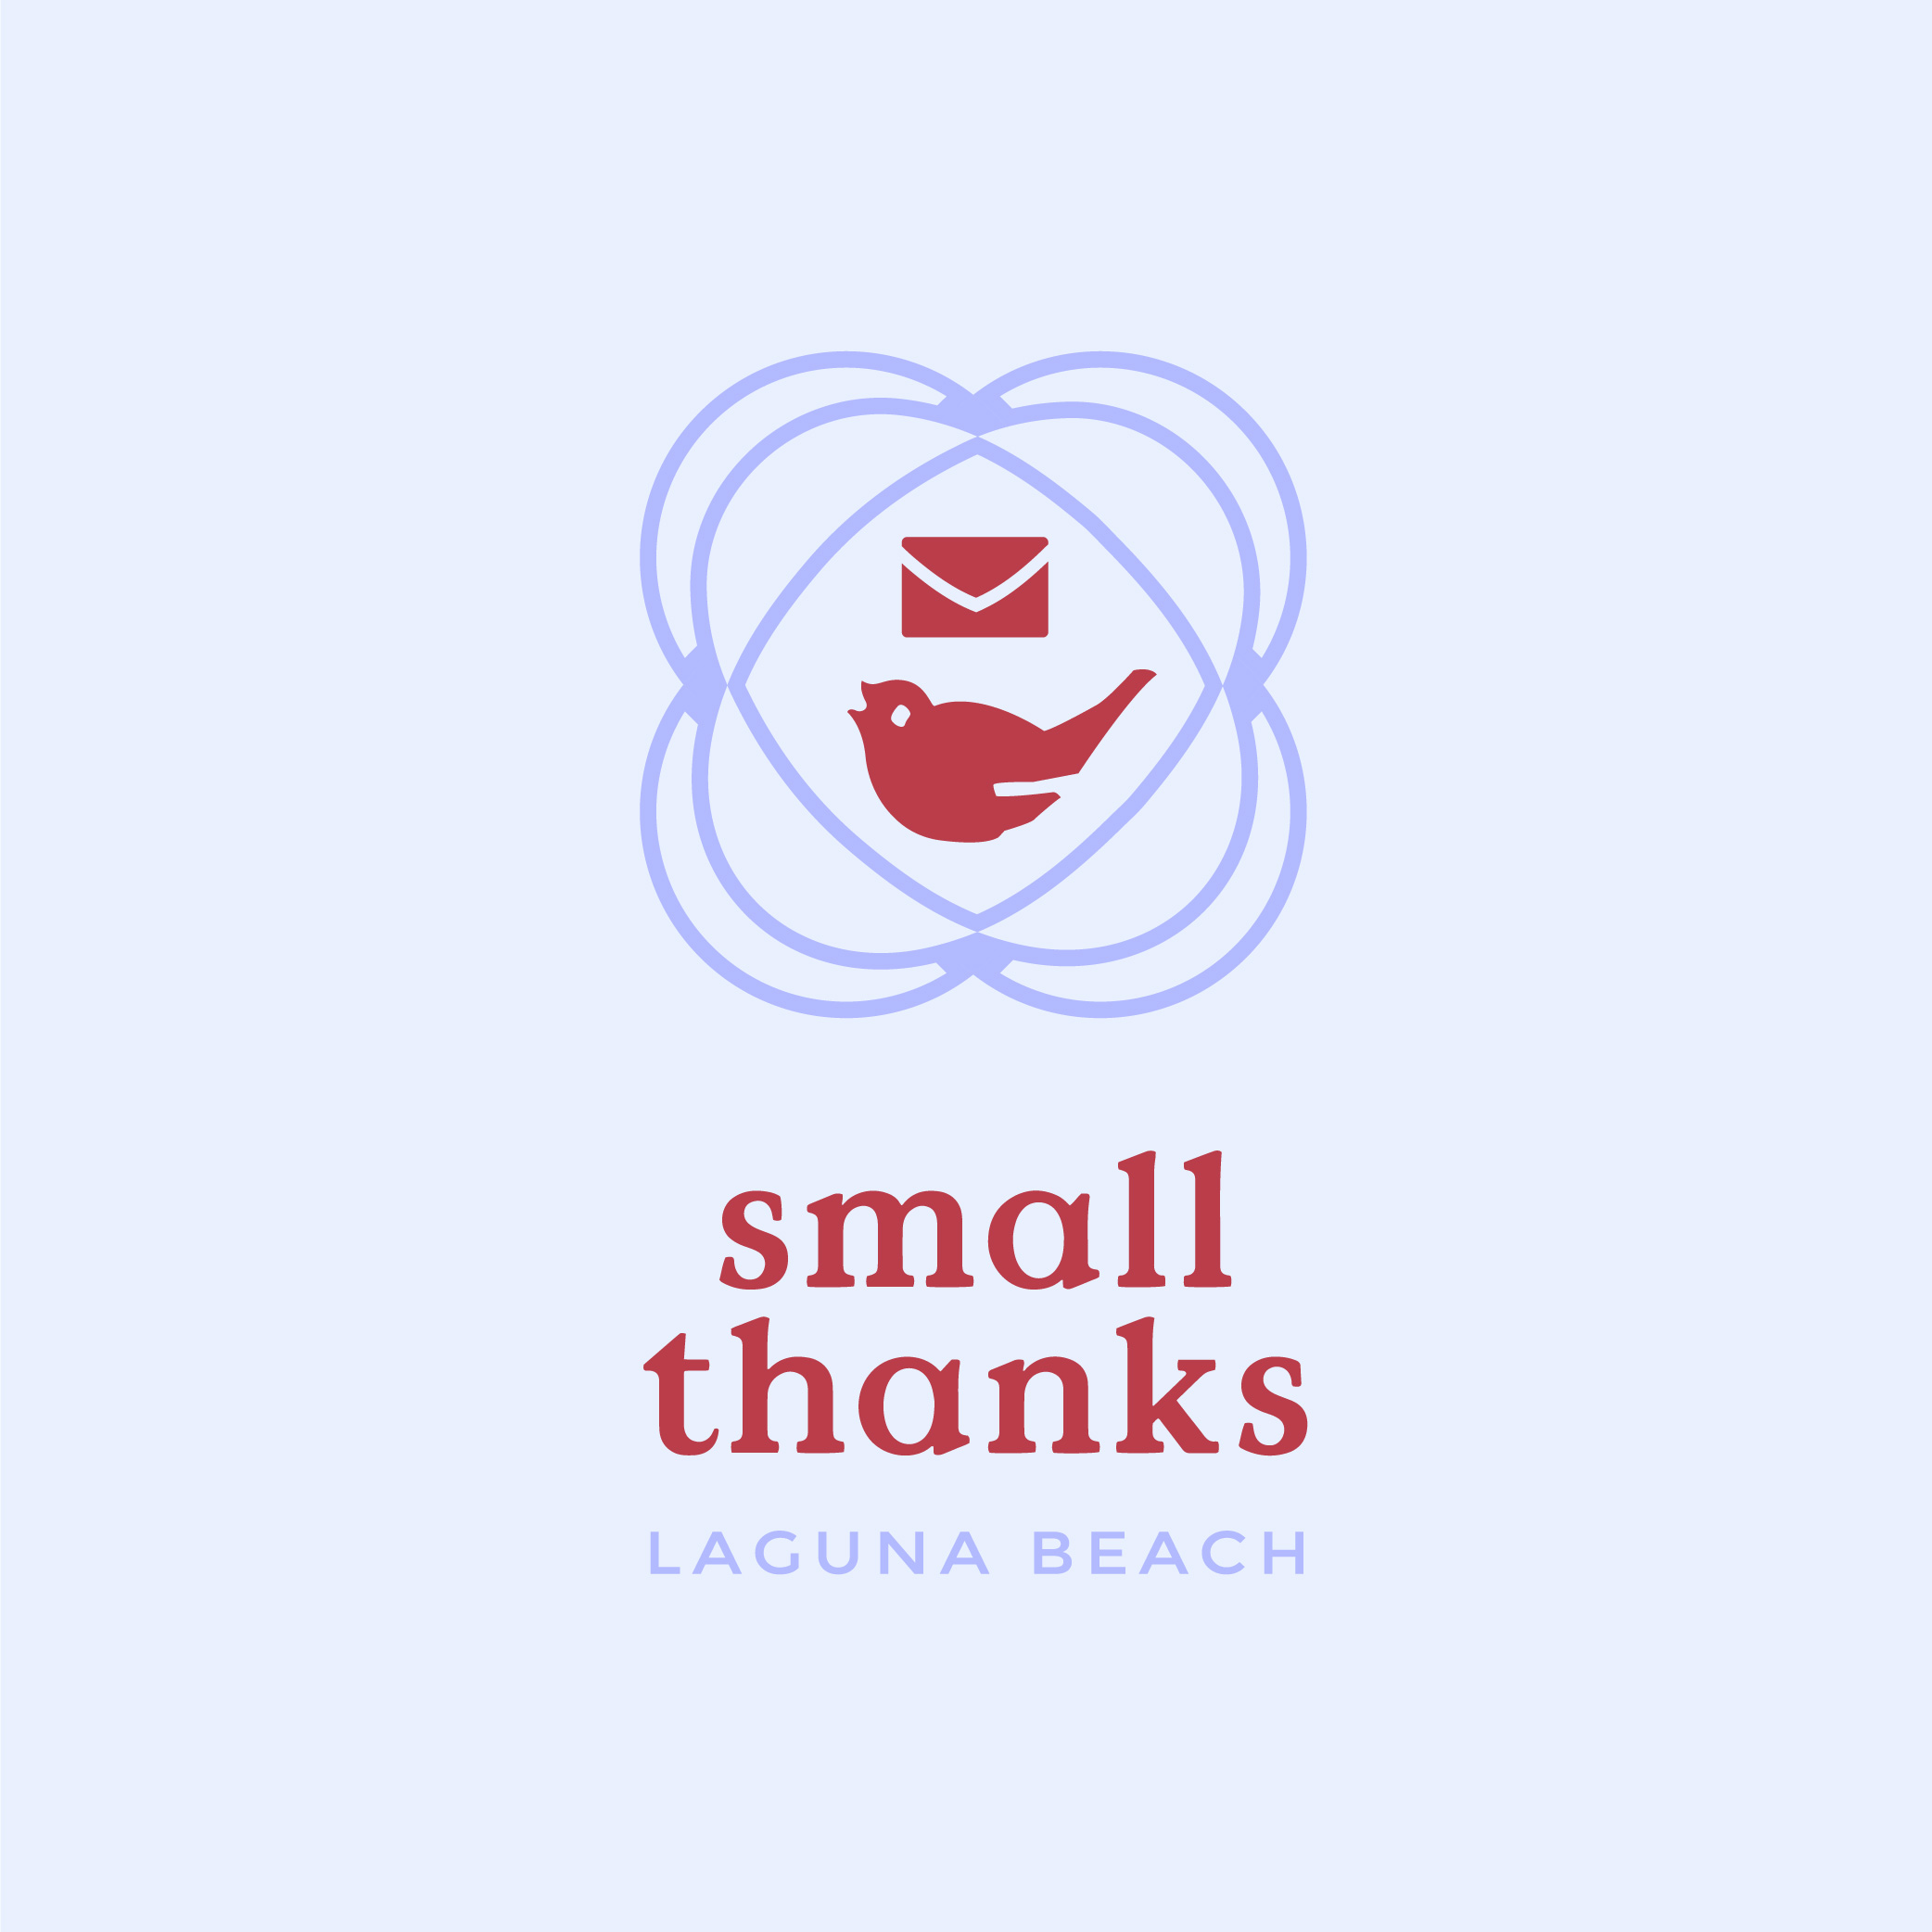 Small Thanks